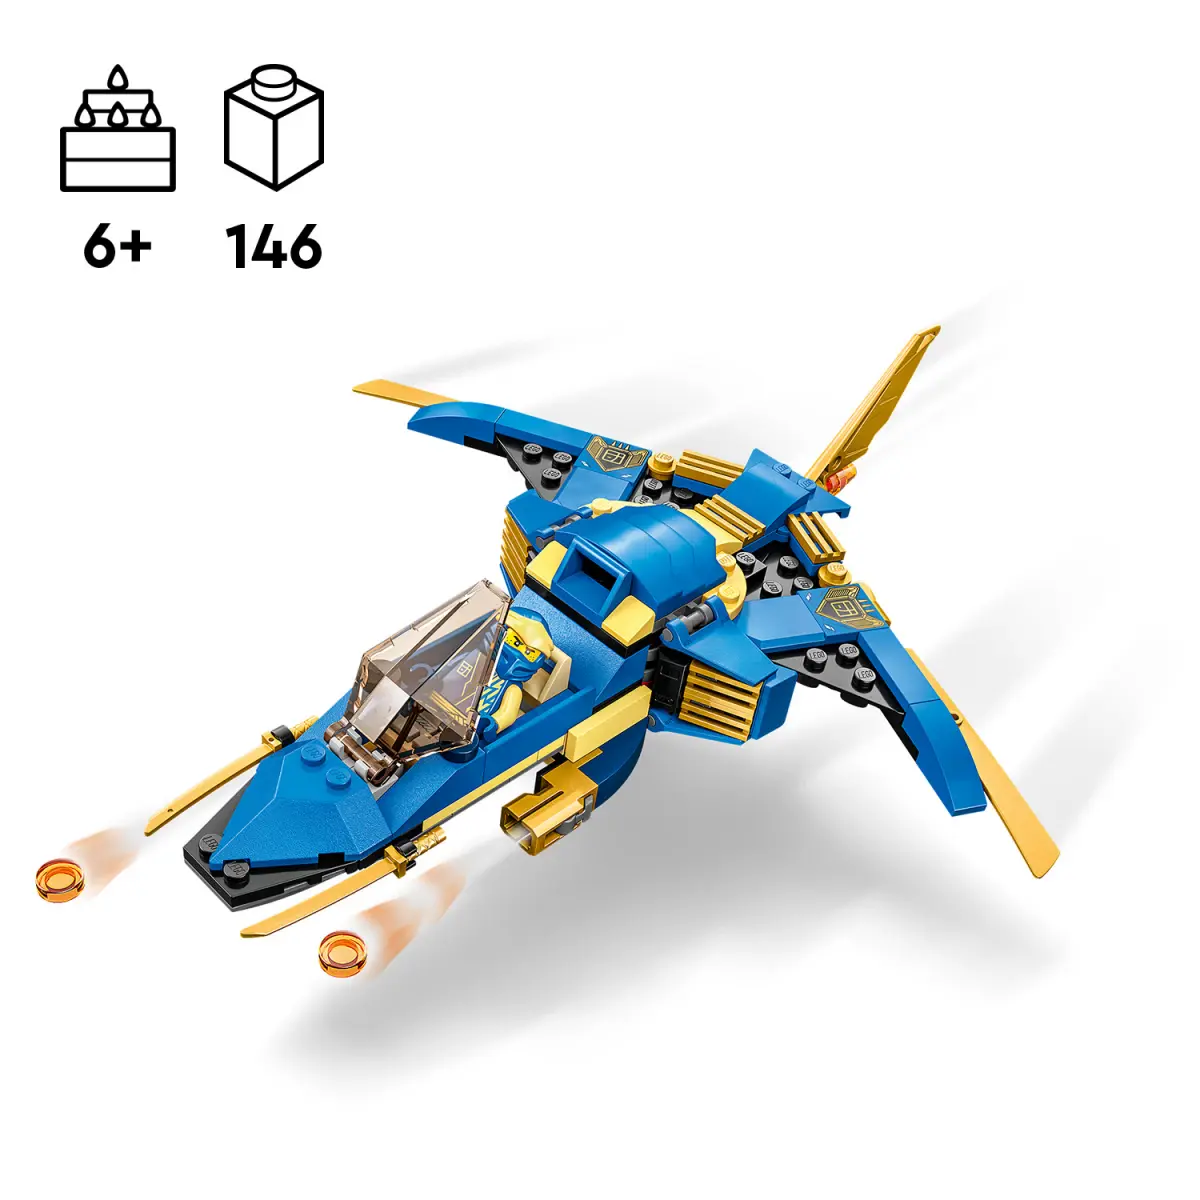 LEGO NINJAGO Jays Lightning Jet EVO Building Toy Set, 146 Pieces, Multicolour, 6Y+